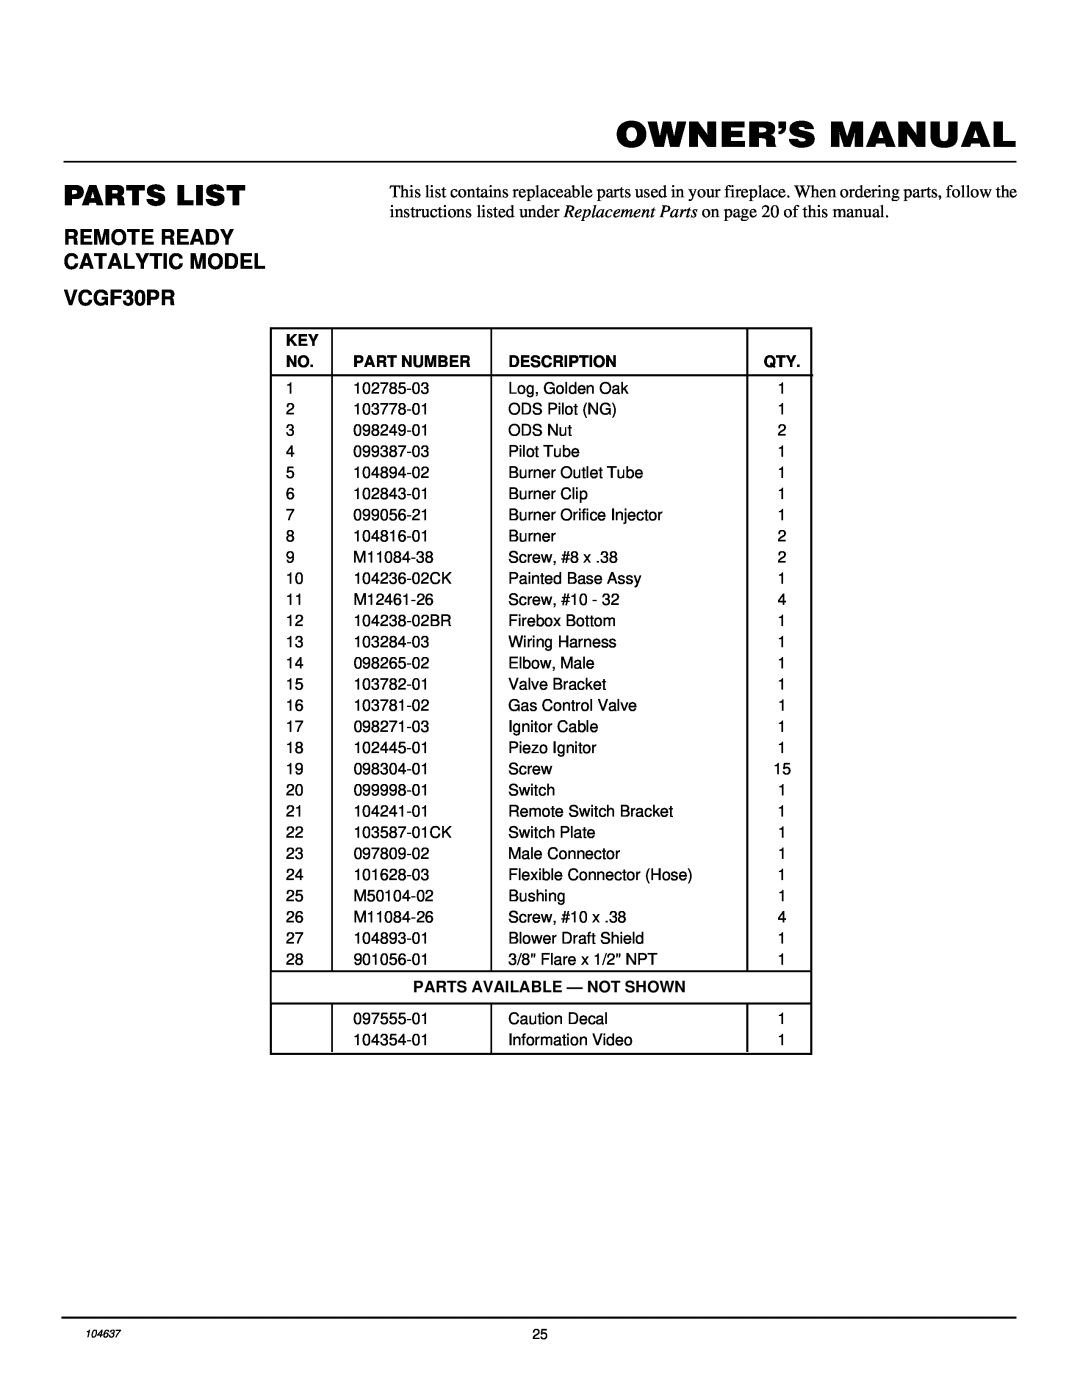 Desa installation manual Parts List, REMOTE READY CATALYTIC MODEL VCGF30PR 